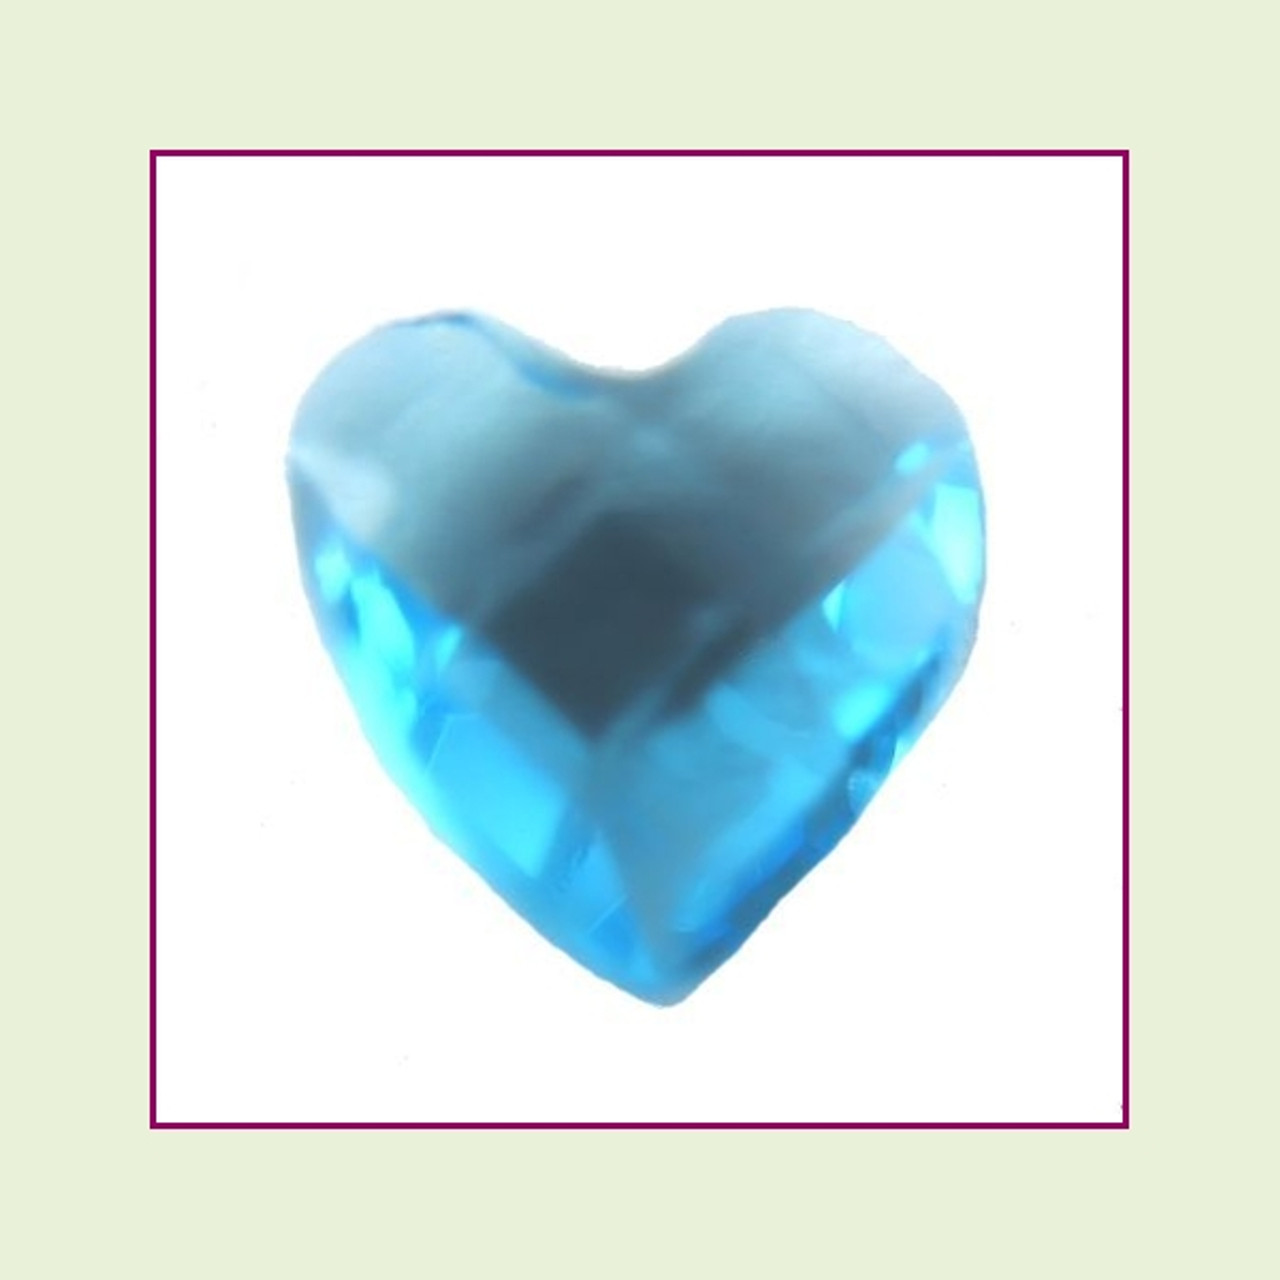 CZH12a - December Blue Topaz Heart Crystal Birthstone – 5mm – For Floating Lockets